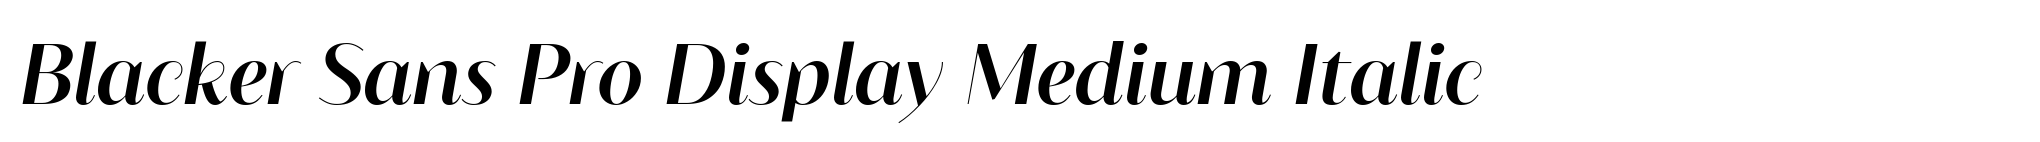 Blacker Sans Pro Display Medium Italic image